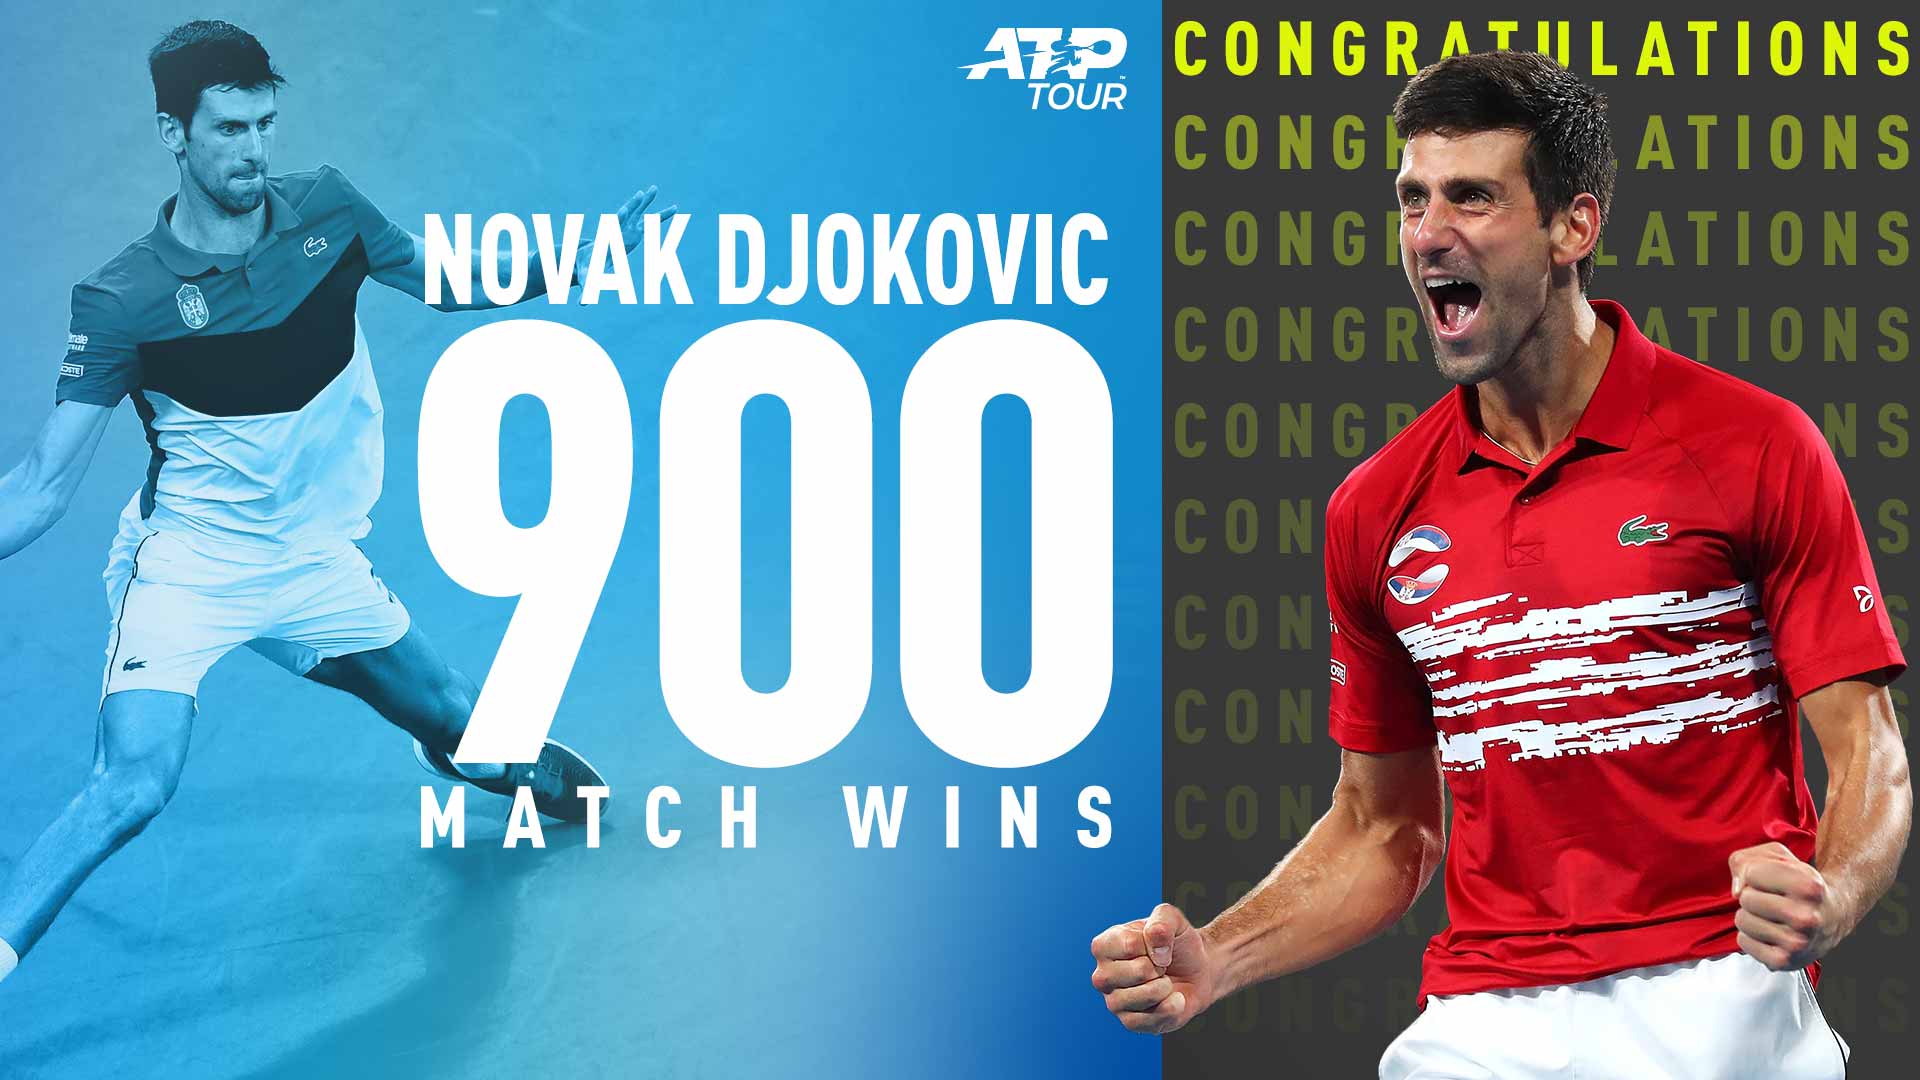 Djokovic 900 match wins